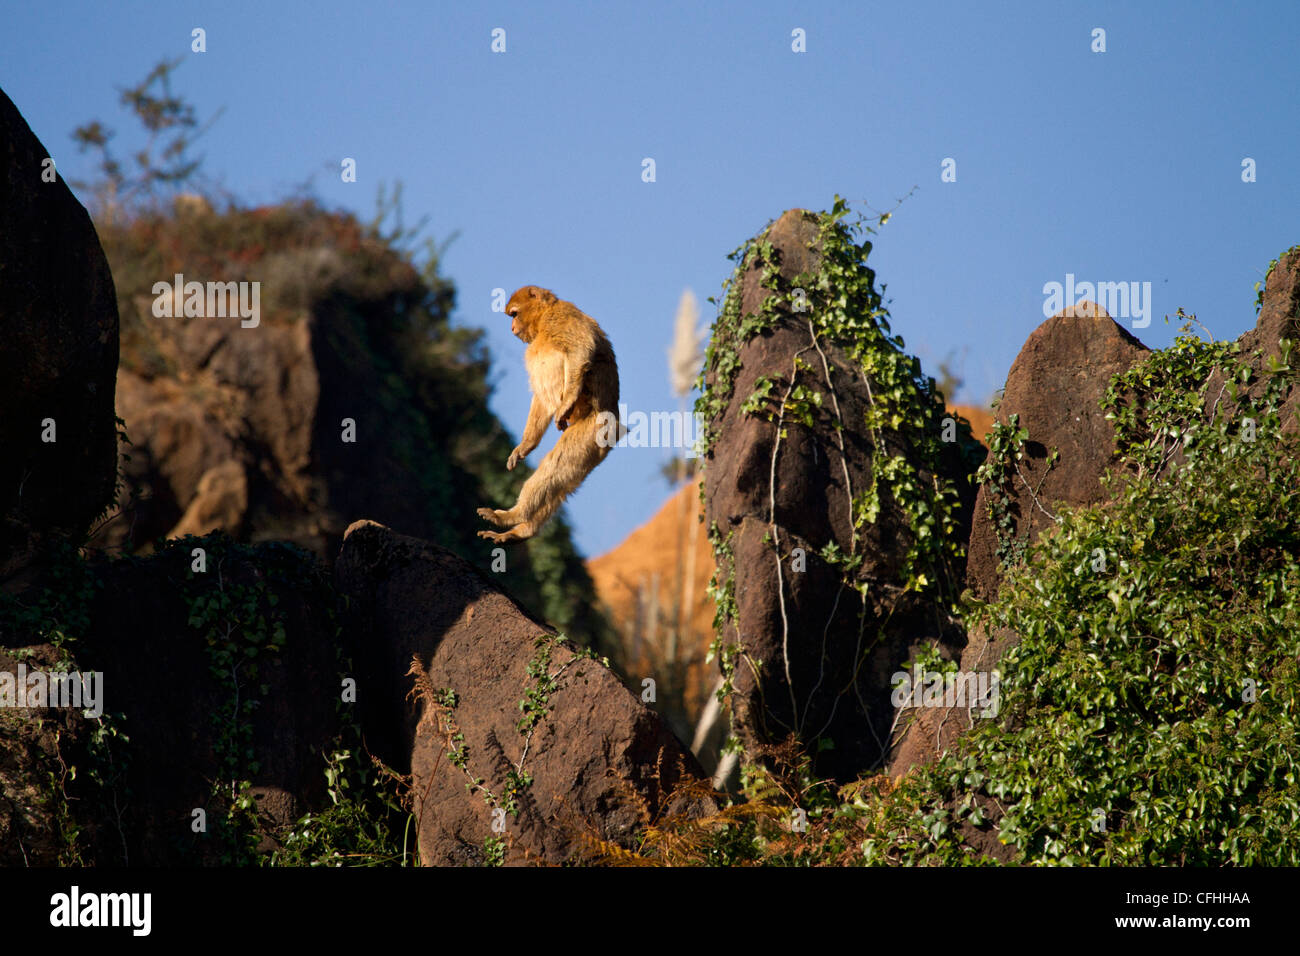 Barbary macaque jumping, Cabarceno, Spain Stock Photo